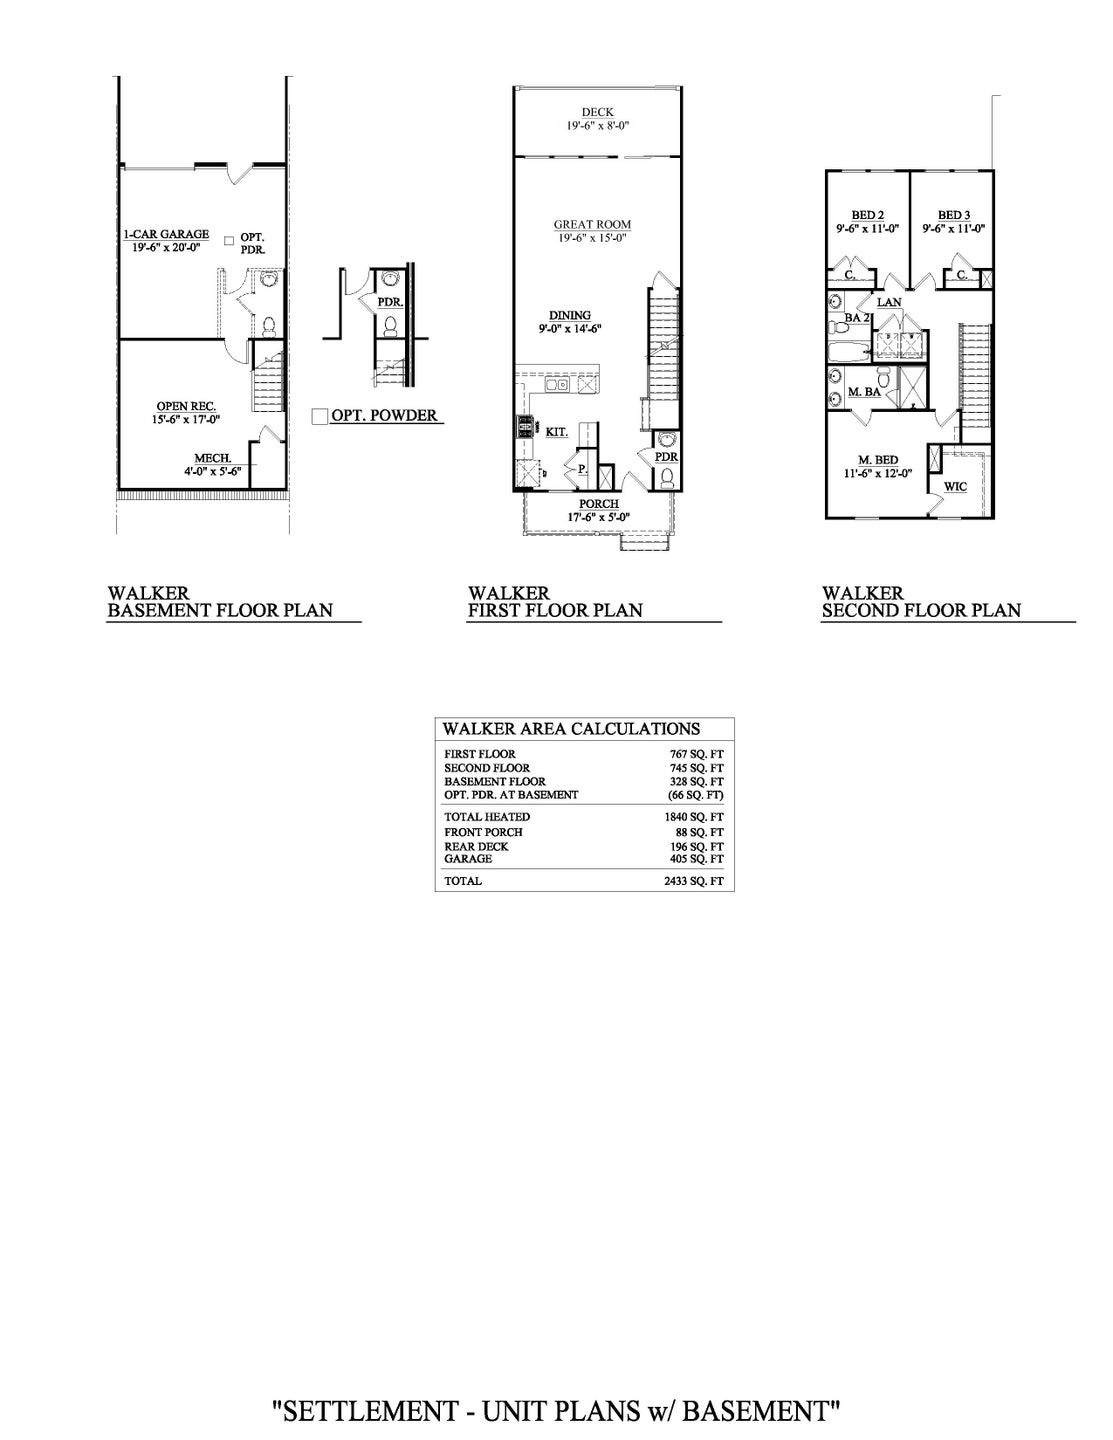 Simpsonville New Home Walker + Basement Floorplan